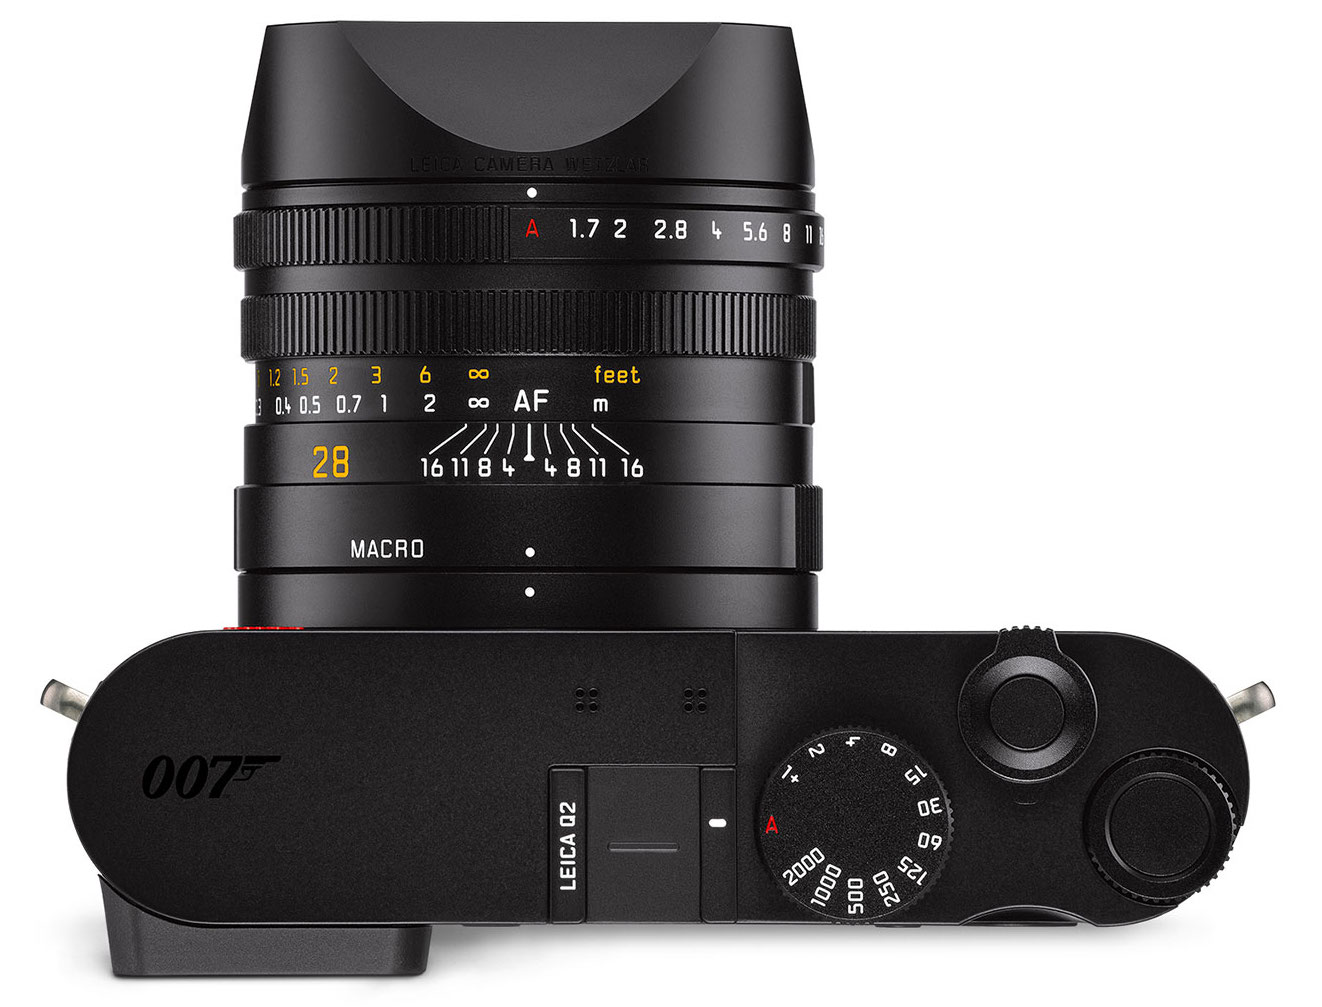 topaz denoise 6 camera models supported